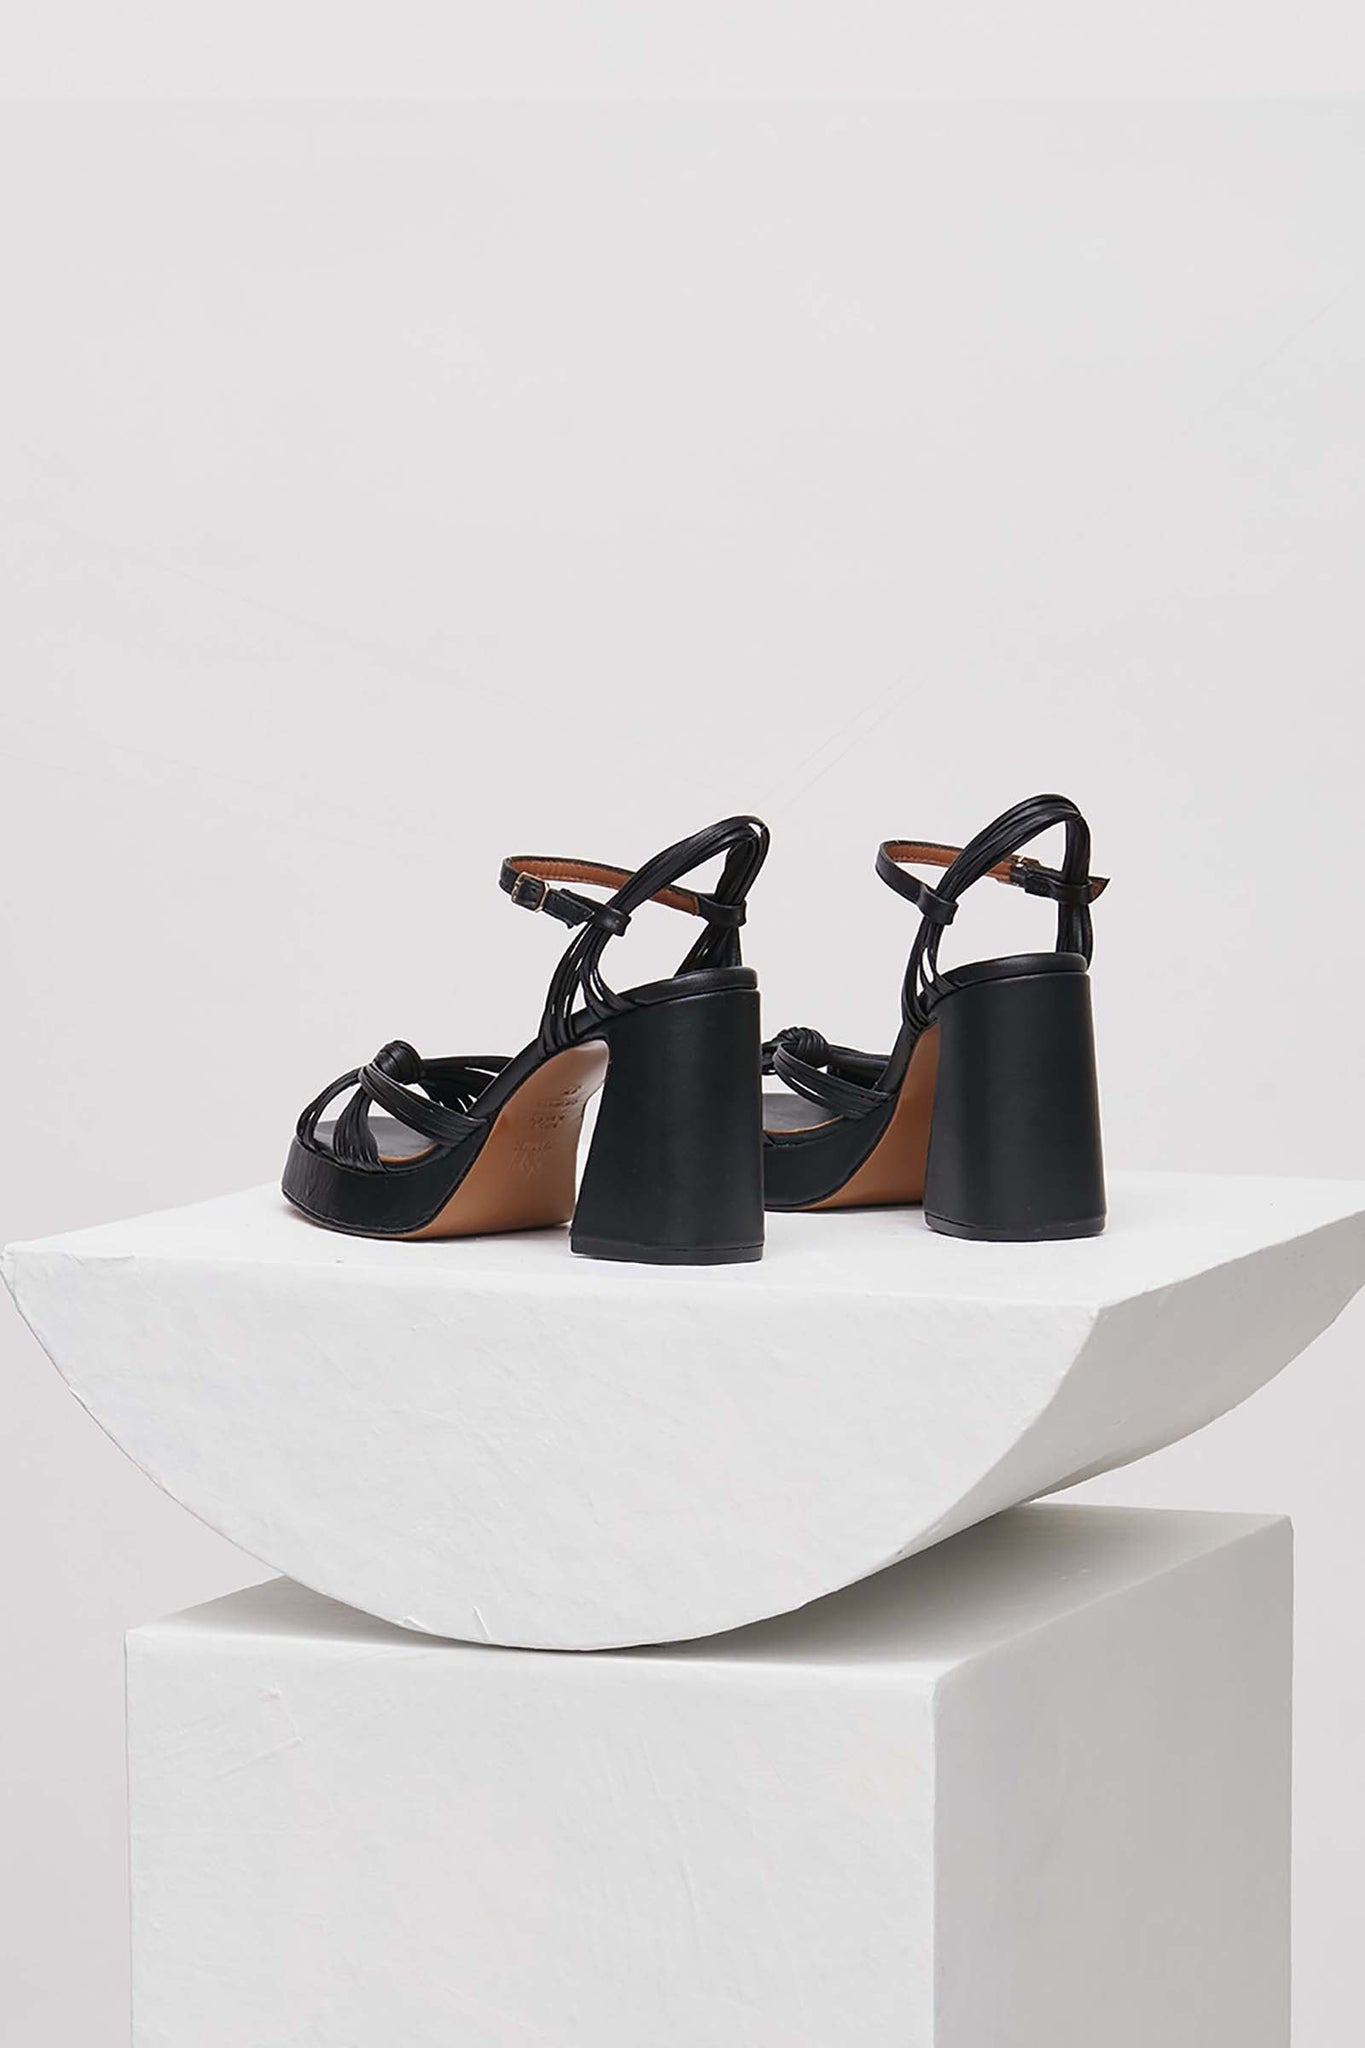 Souliers Martinez Shoes SPRINGS - Black Leather Platform Sandals 